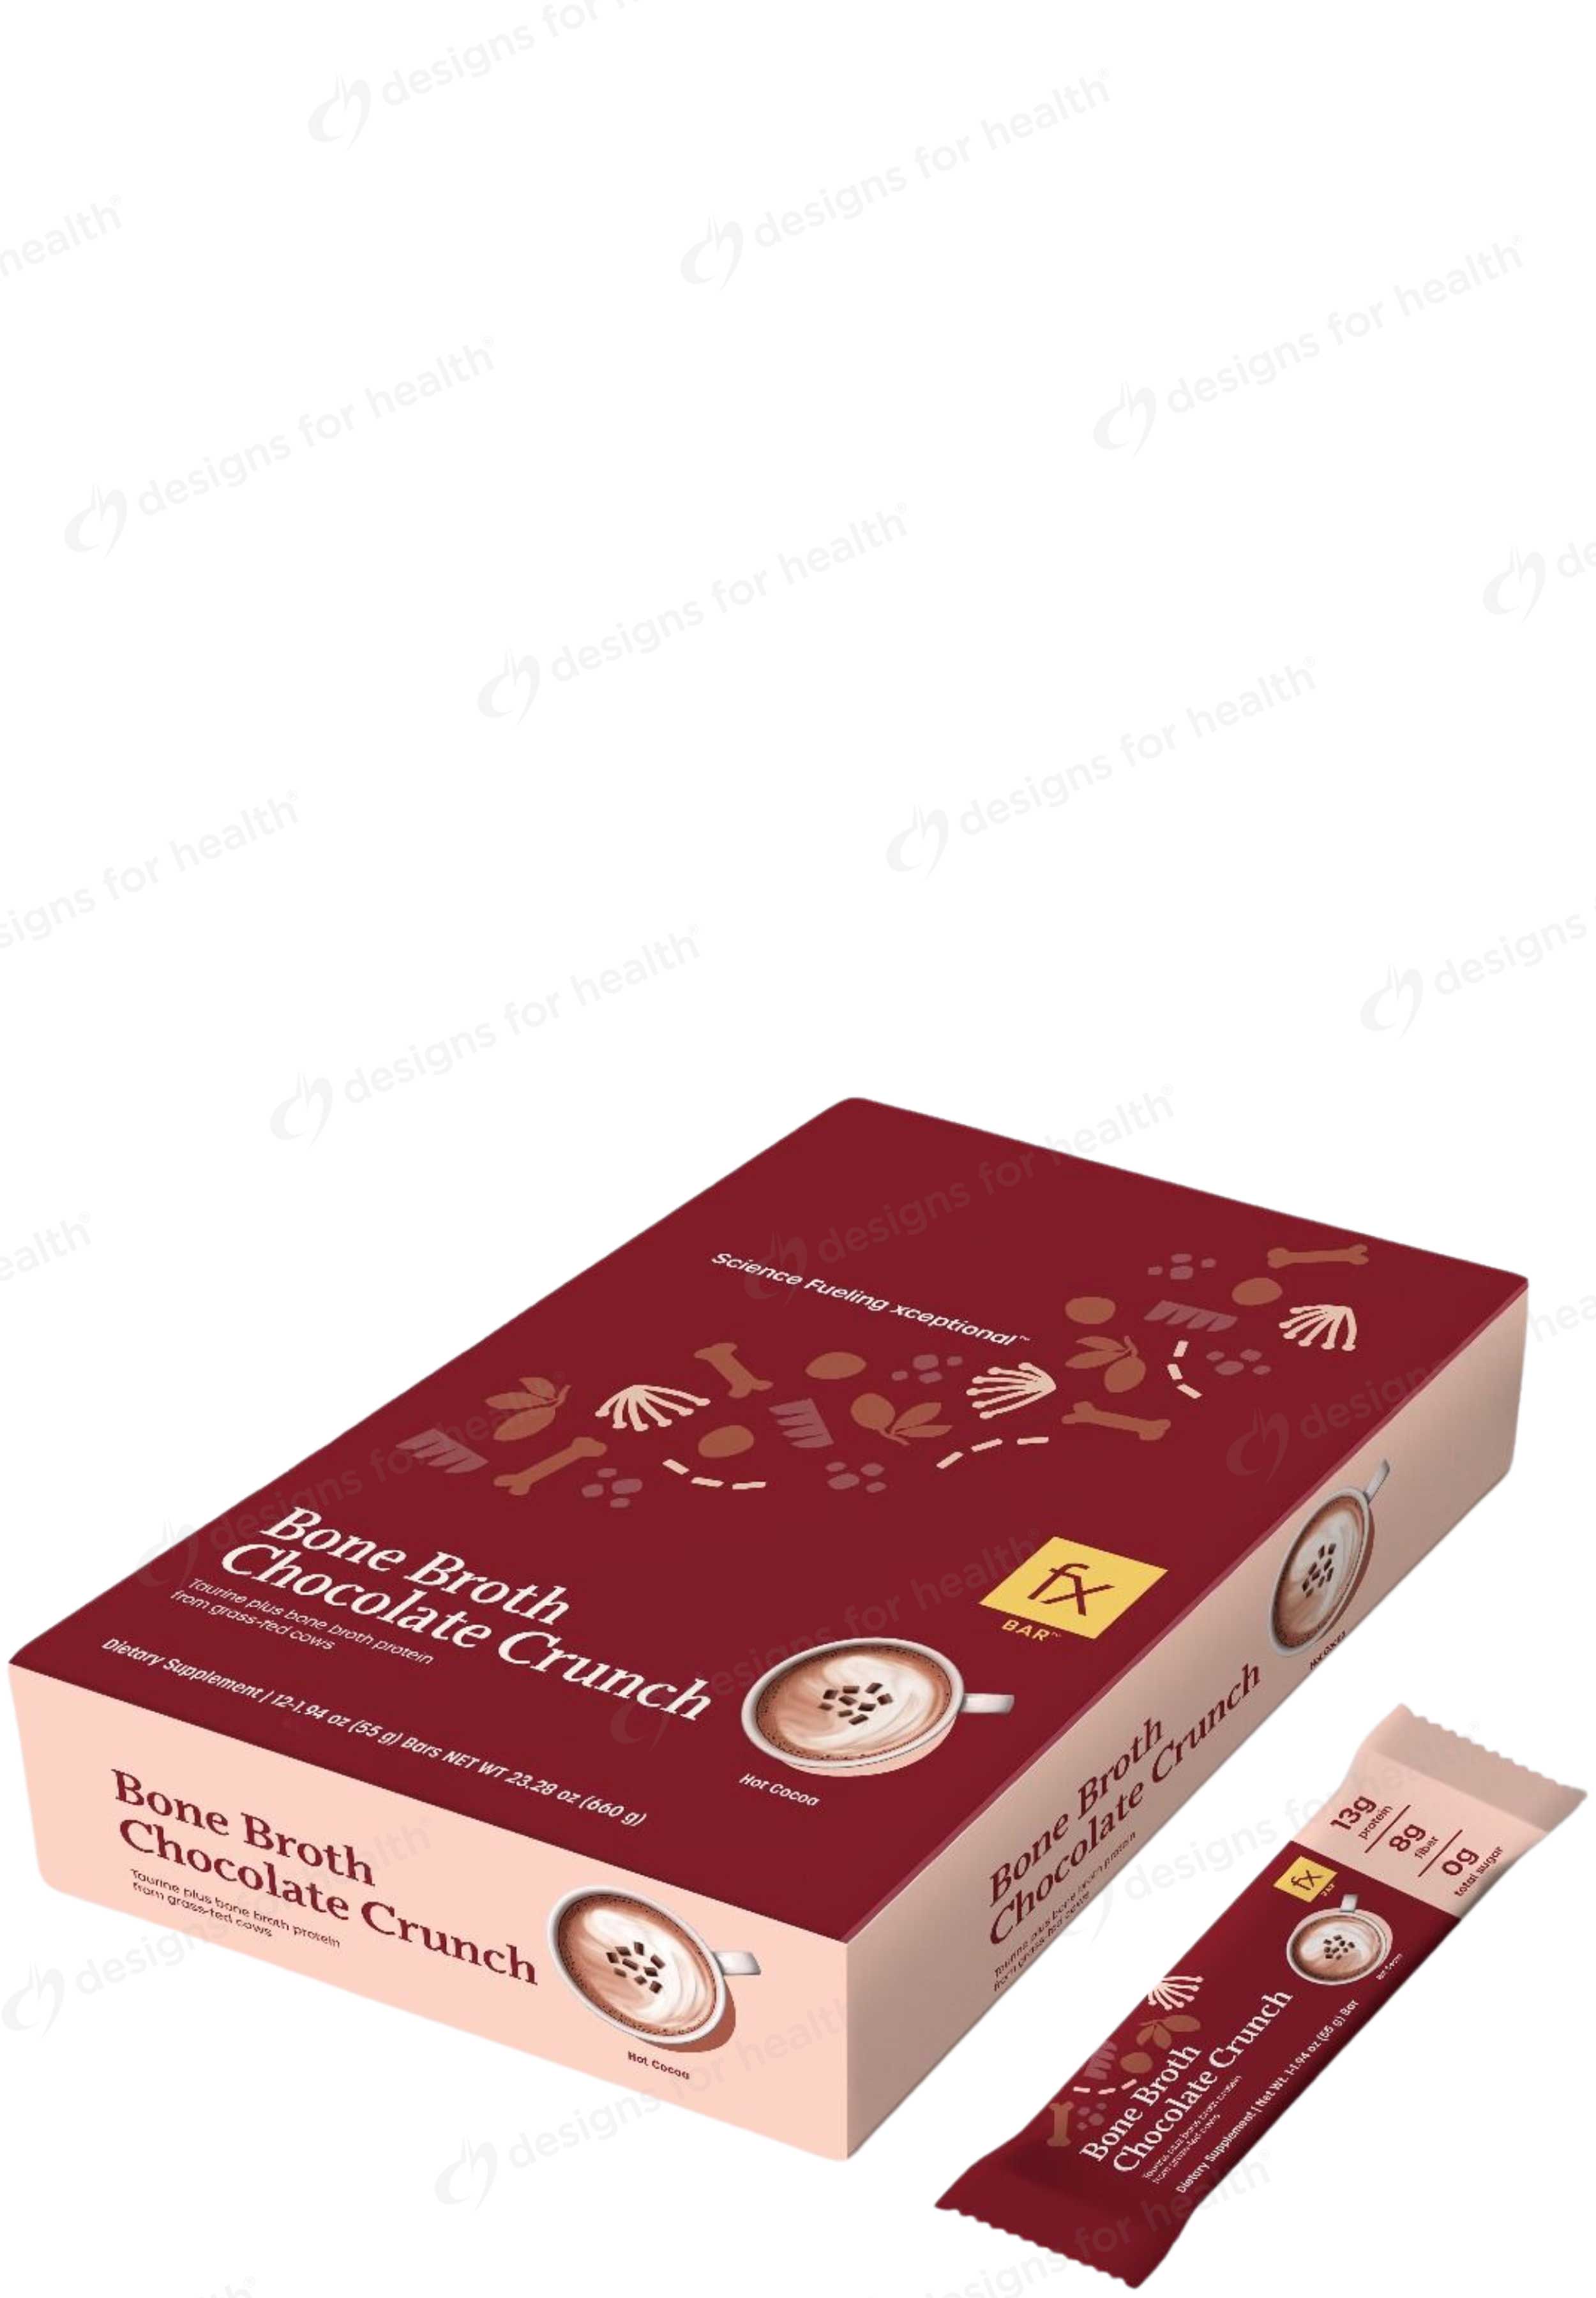 Designs for Health Bone Broth Chocolate Crunch Box